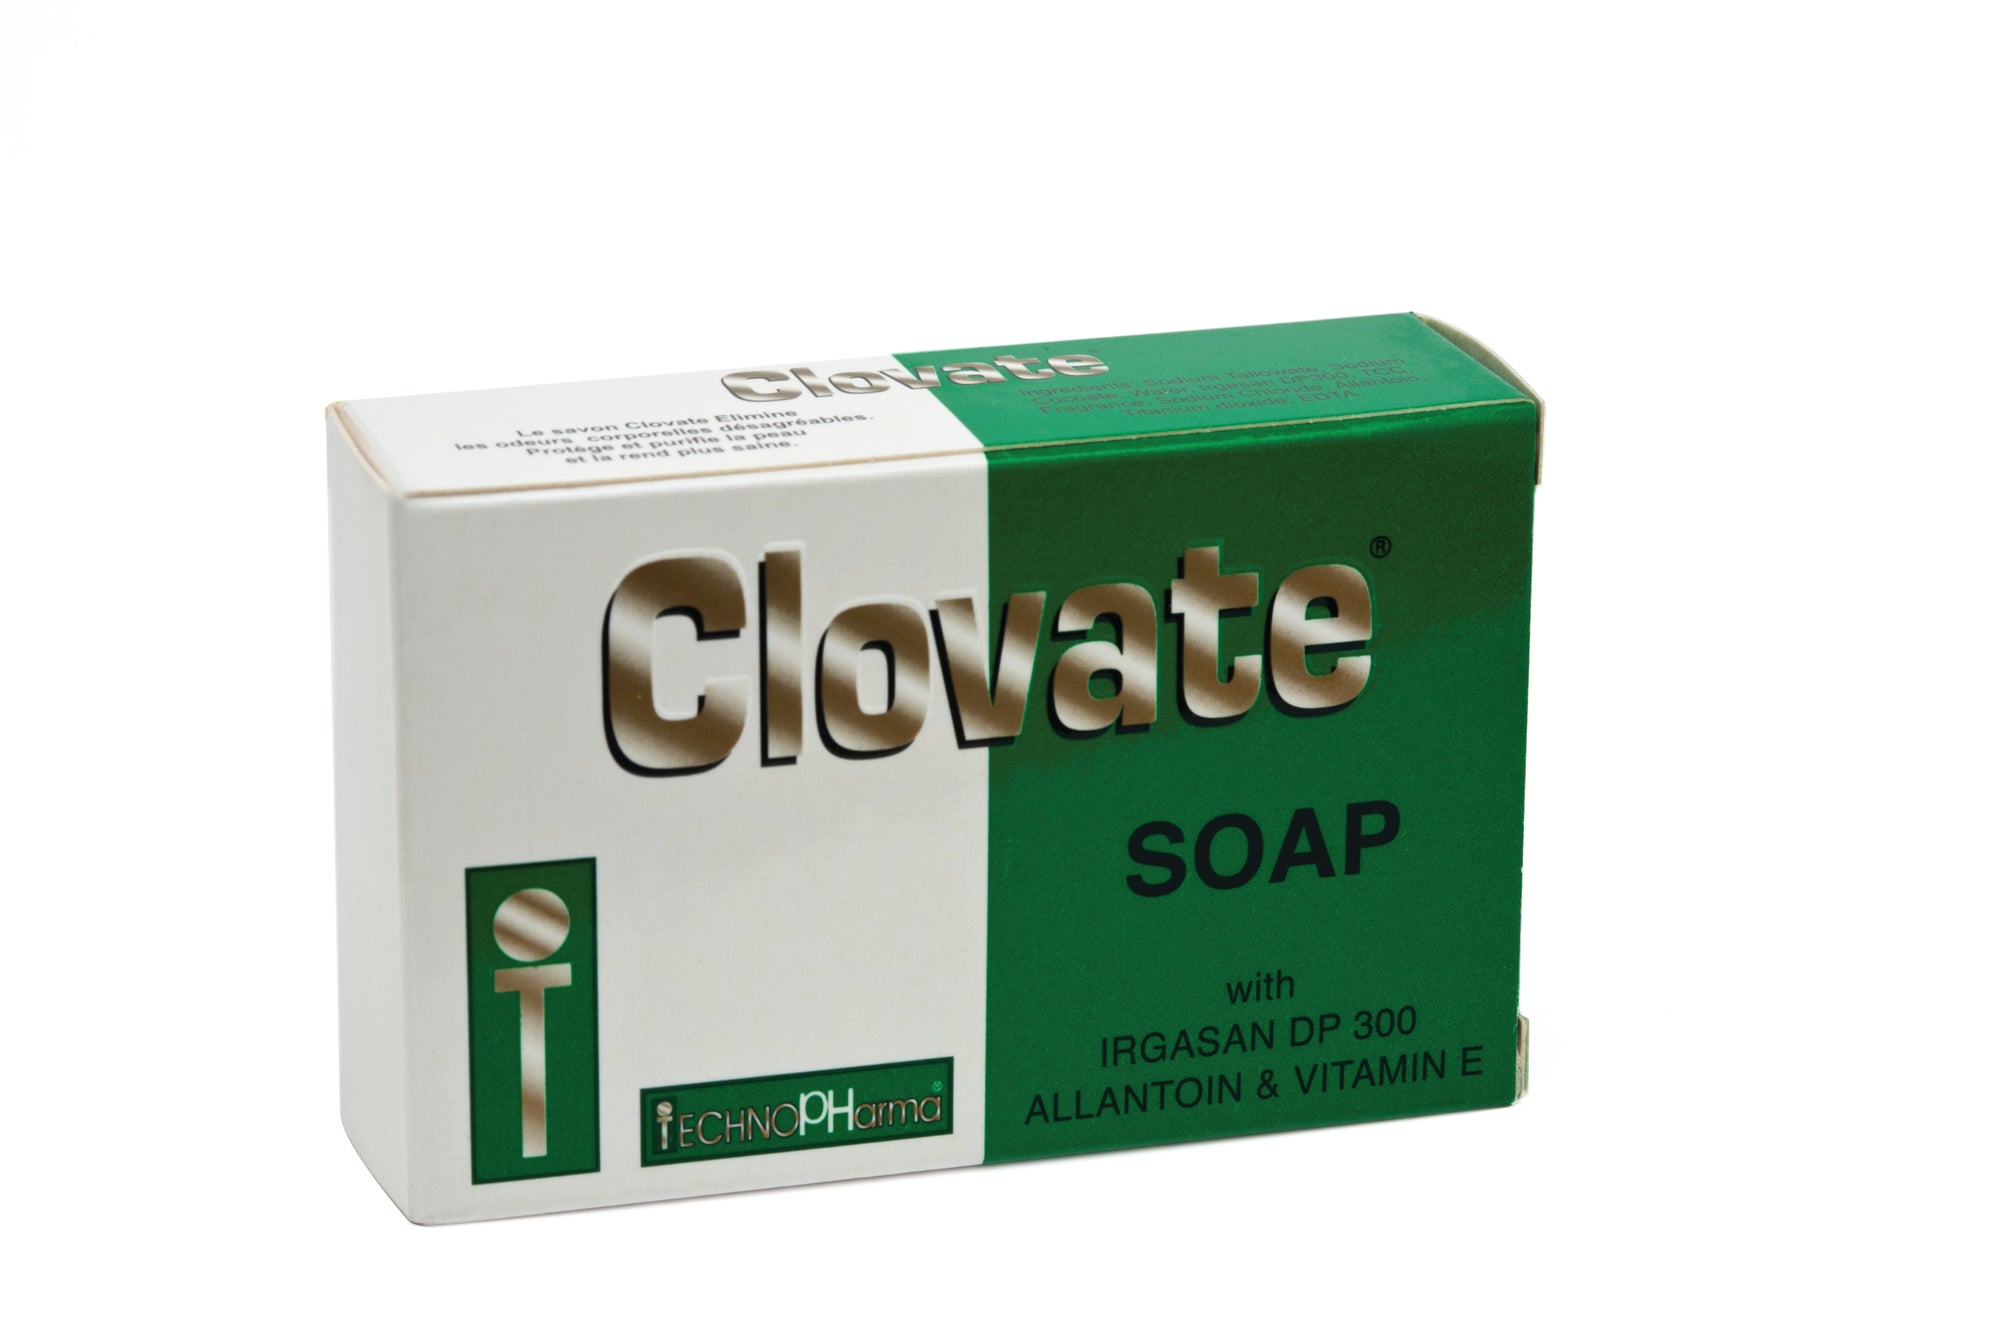 Clovate Beauty Soap - 80g / 2.82 oz Clovate - Mitchell Brands - Skin Lightening, Skin Brightening, Fade Dark Spots, Shea Butter, Hair Growth Products